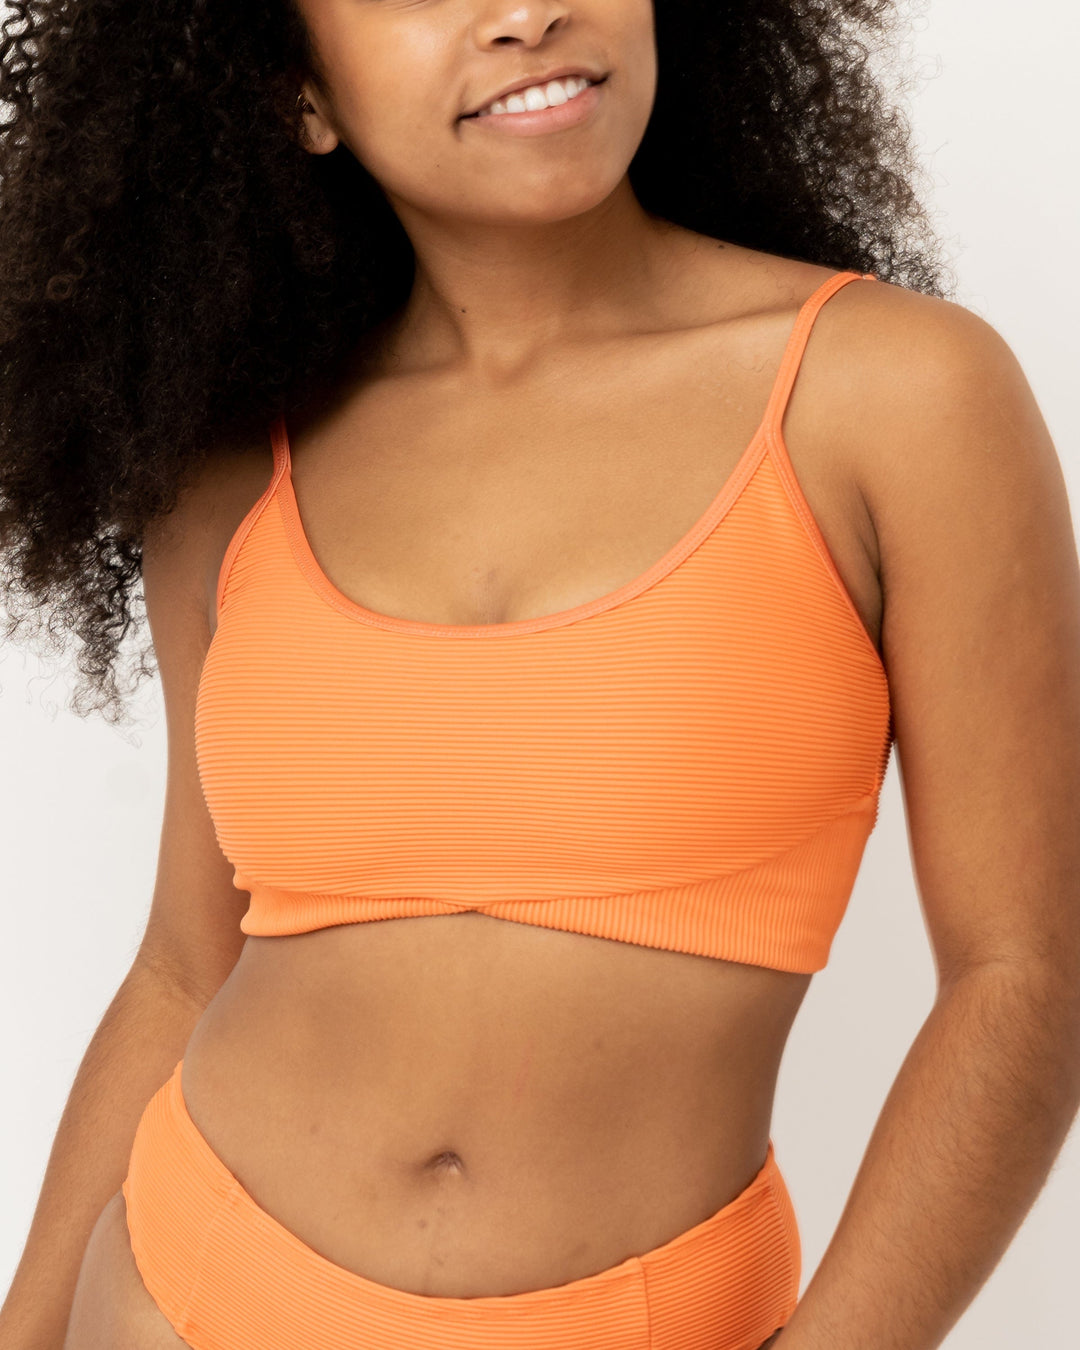 Front view Studio picture of a girl wearing textured orange bikini top